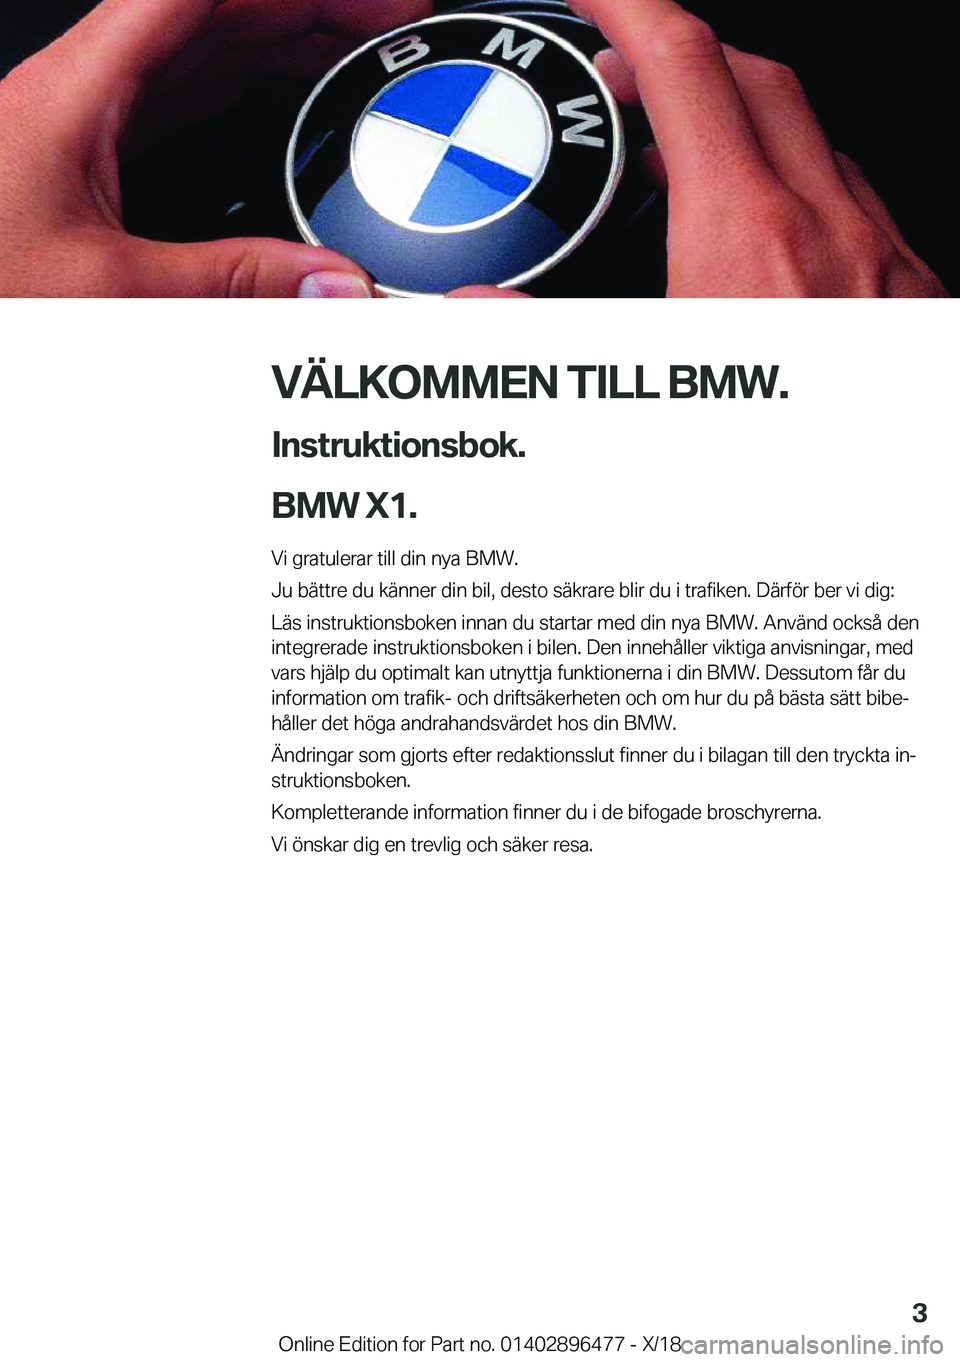 BMW X1 2019  InstruktionsbÖcker (in Swedish) �V�Ä�L�K�O�M�M�E�N��T�I�L�L��B�M�W�.�I�n�s�t�r�u�k�t�i�o�n�s�b�o�k�.
�B�M�W��X�1�.
�V�i��g�r�a�t�u�l�e�r�a�r��t�i�l�l��d�i�n��n�y�a��B�M�W�.
�J�u��b�ä�t�t�r�e��d�u��k�ä�n�n�e�r��d�i�n�